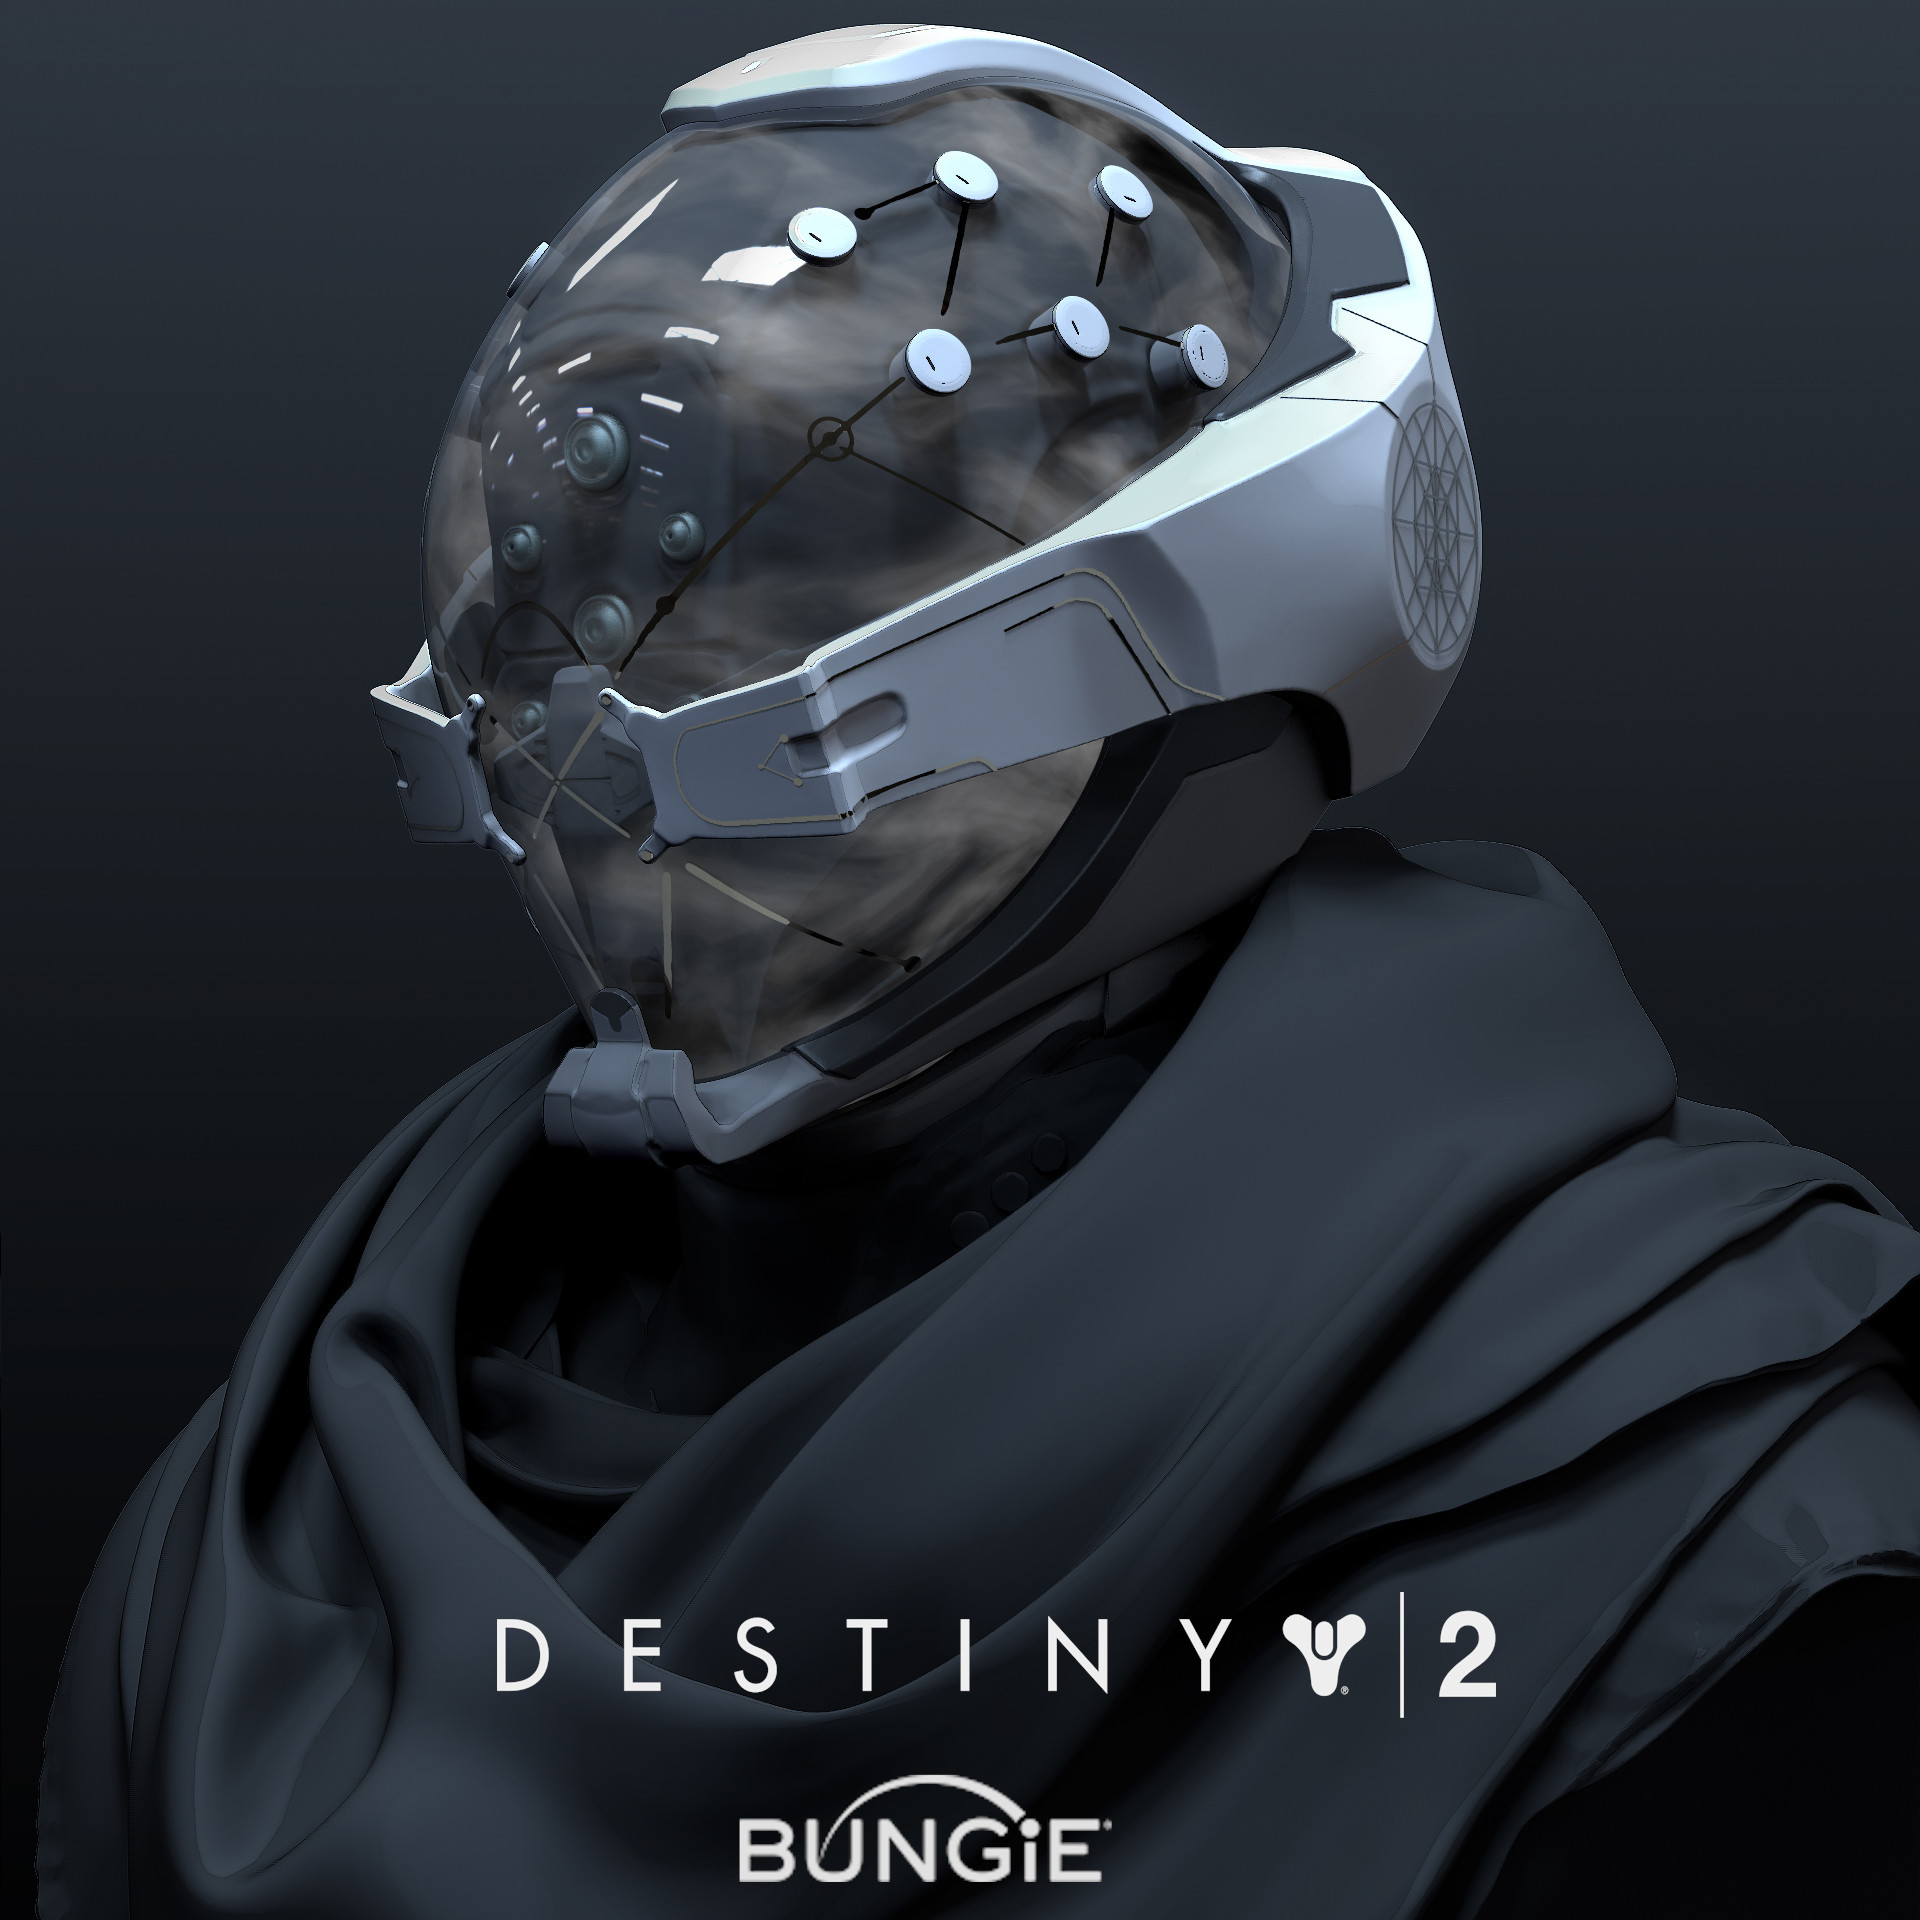 exotic warlock helmet destiny 2 concept by Adrian Majkrzak https://www.arts...